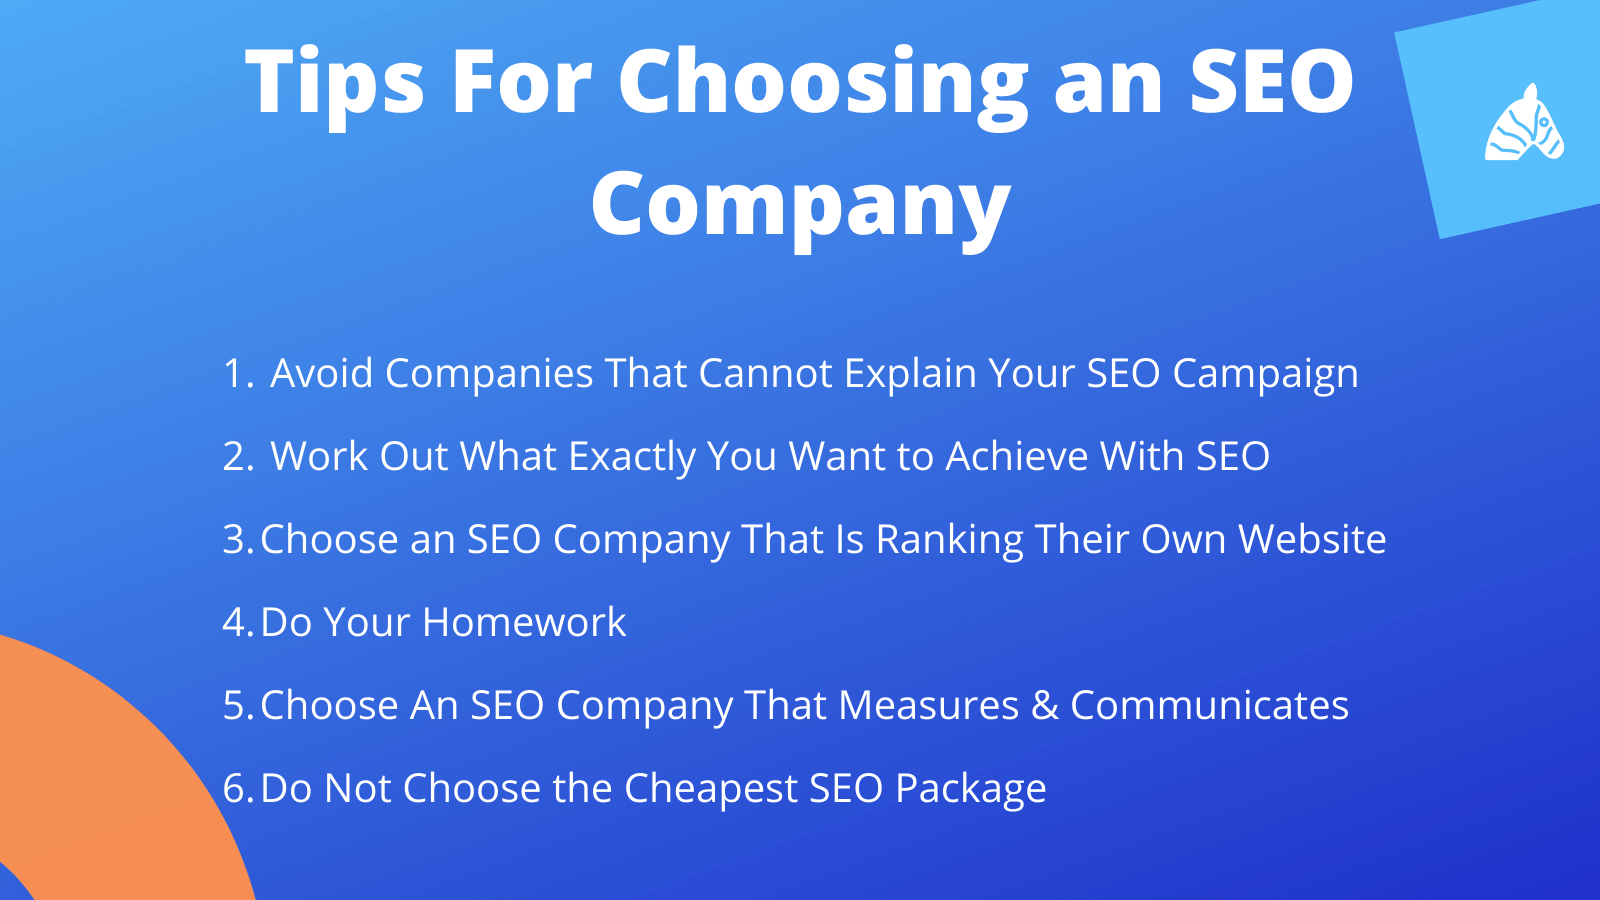 How To Choose an SEO Company